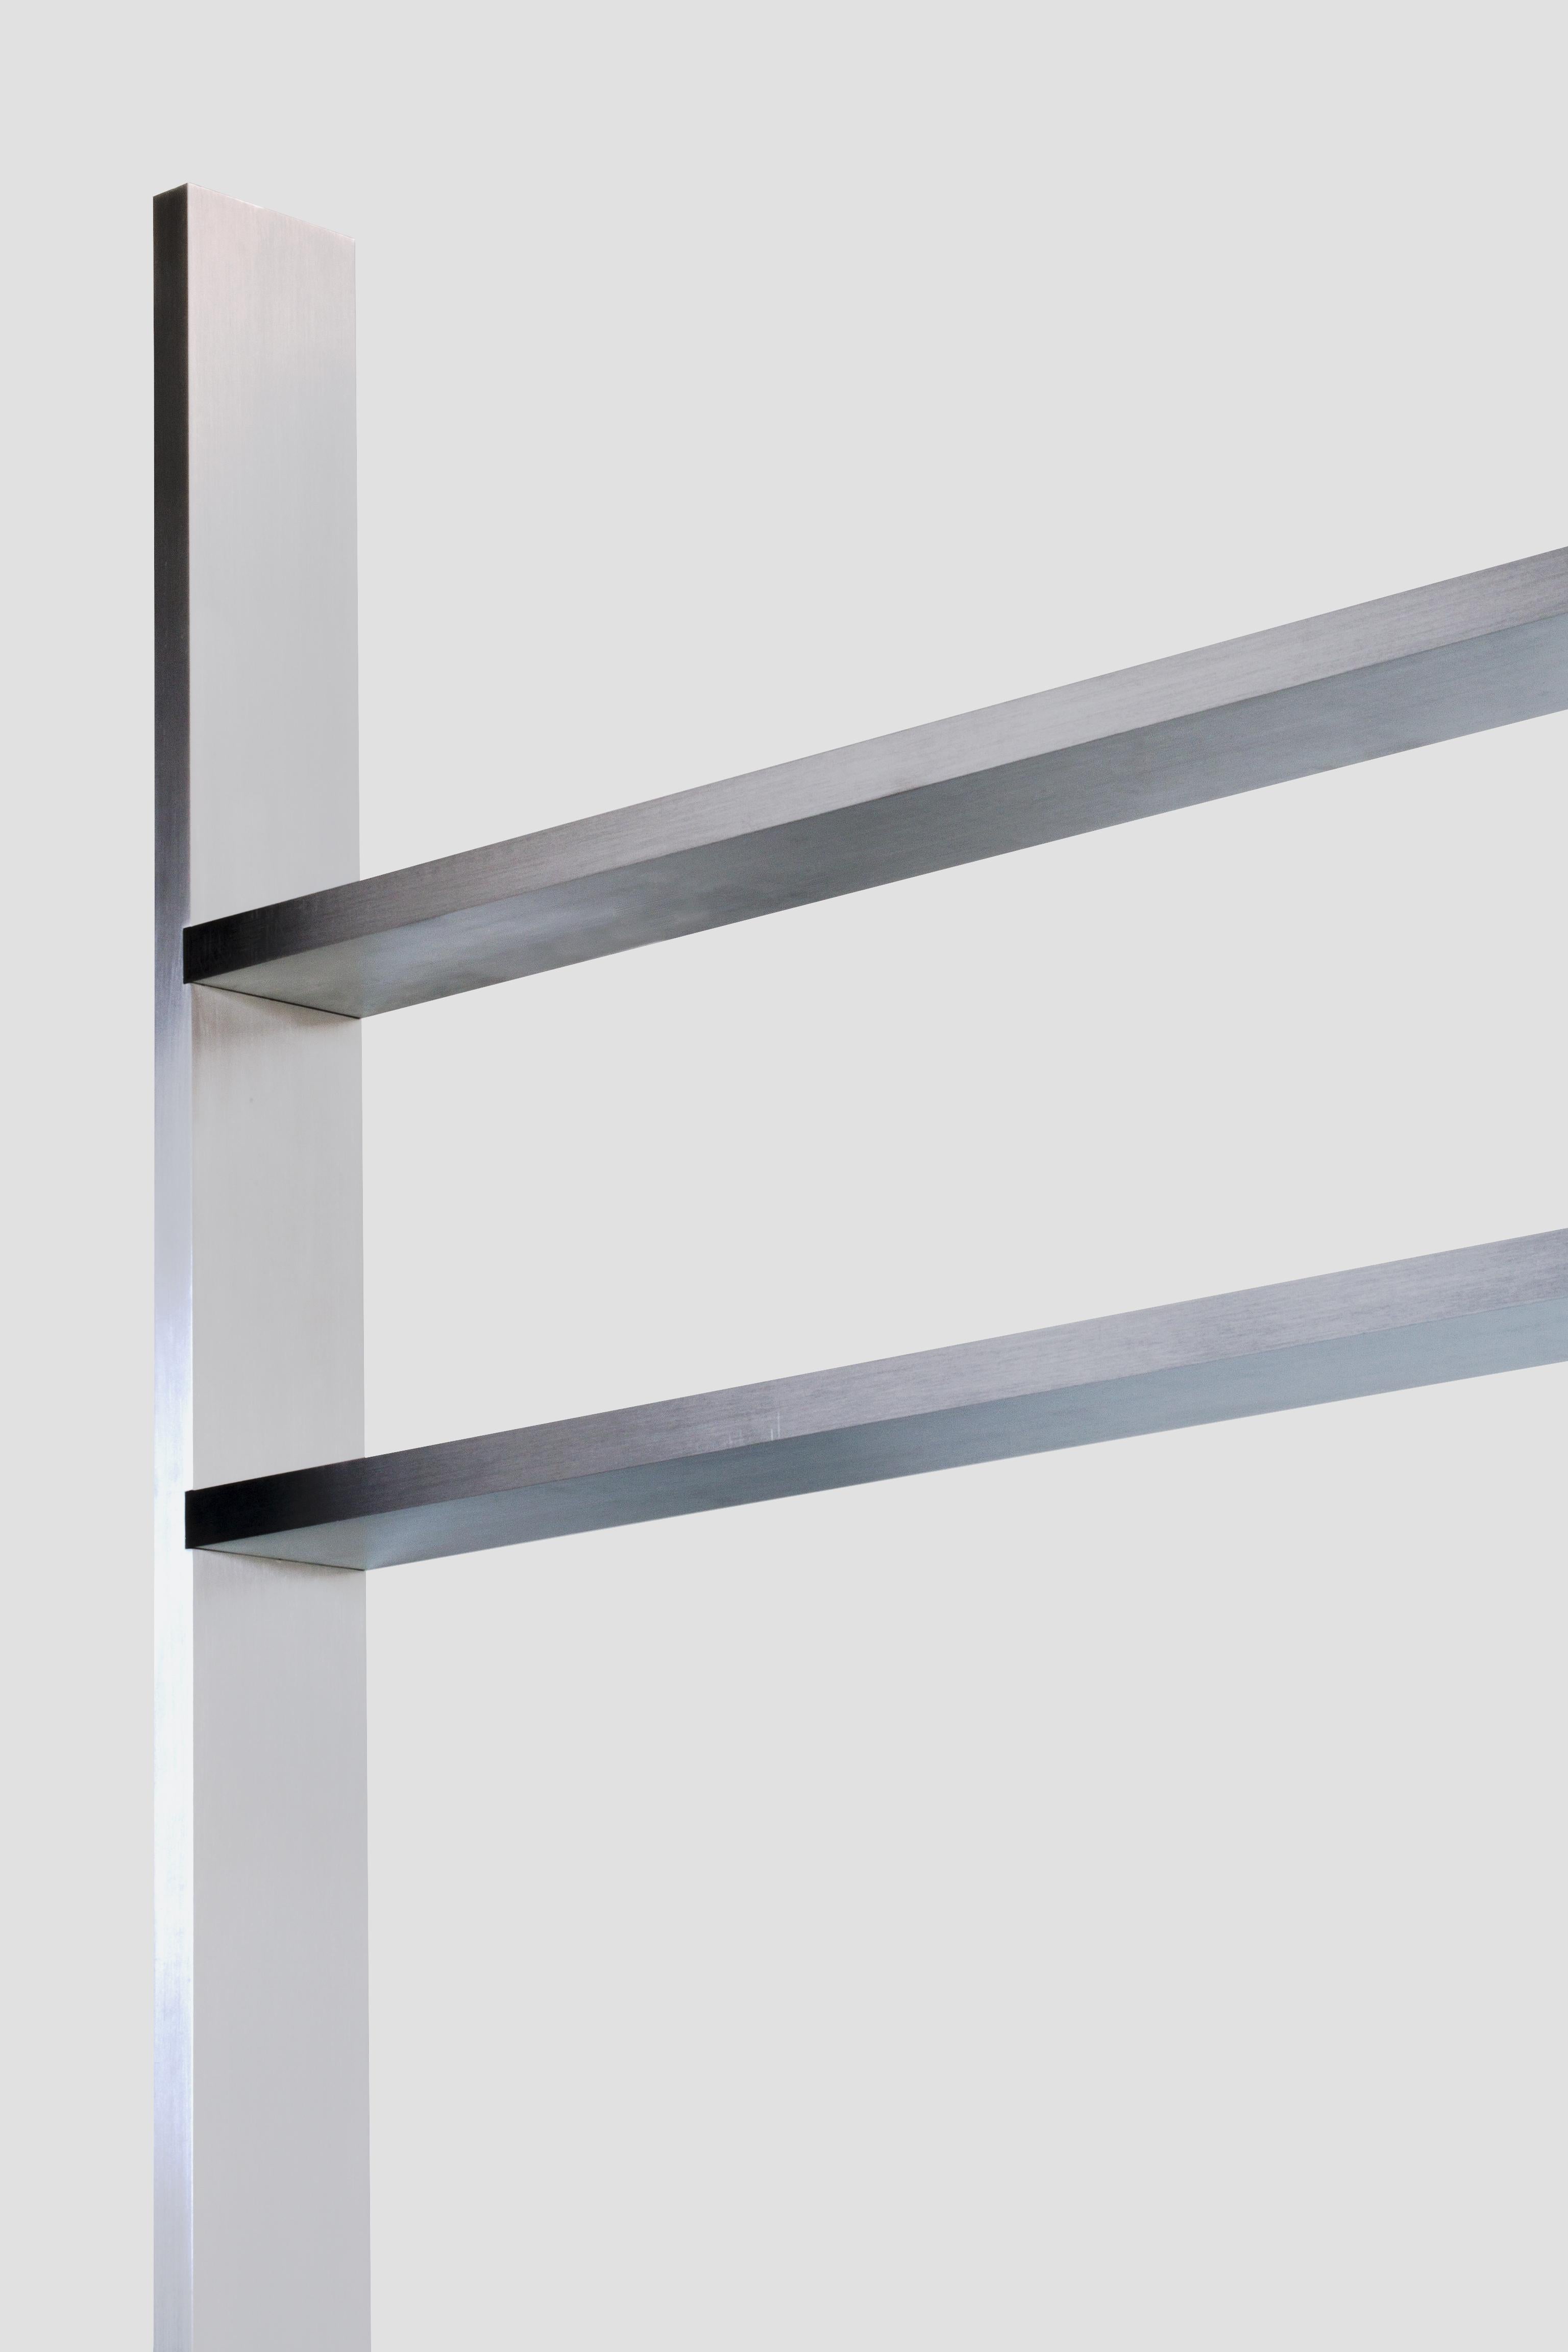 Dutch Contemporary Minimalistic Shelf in Waxed Aluminum by Johan Viladrich